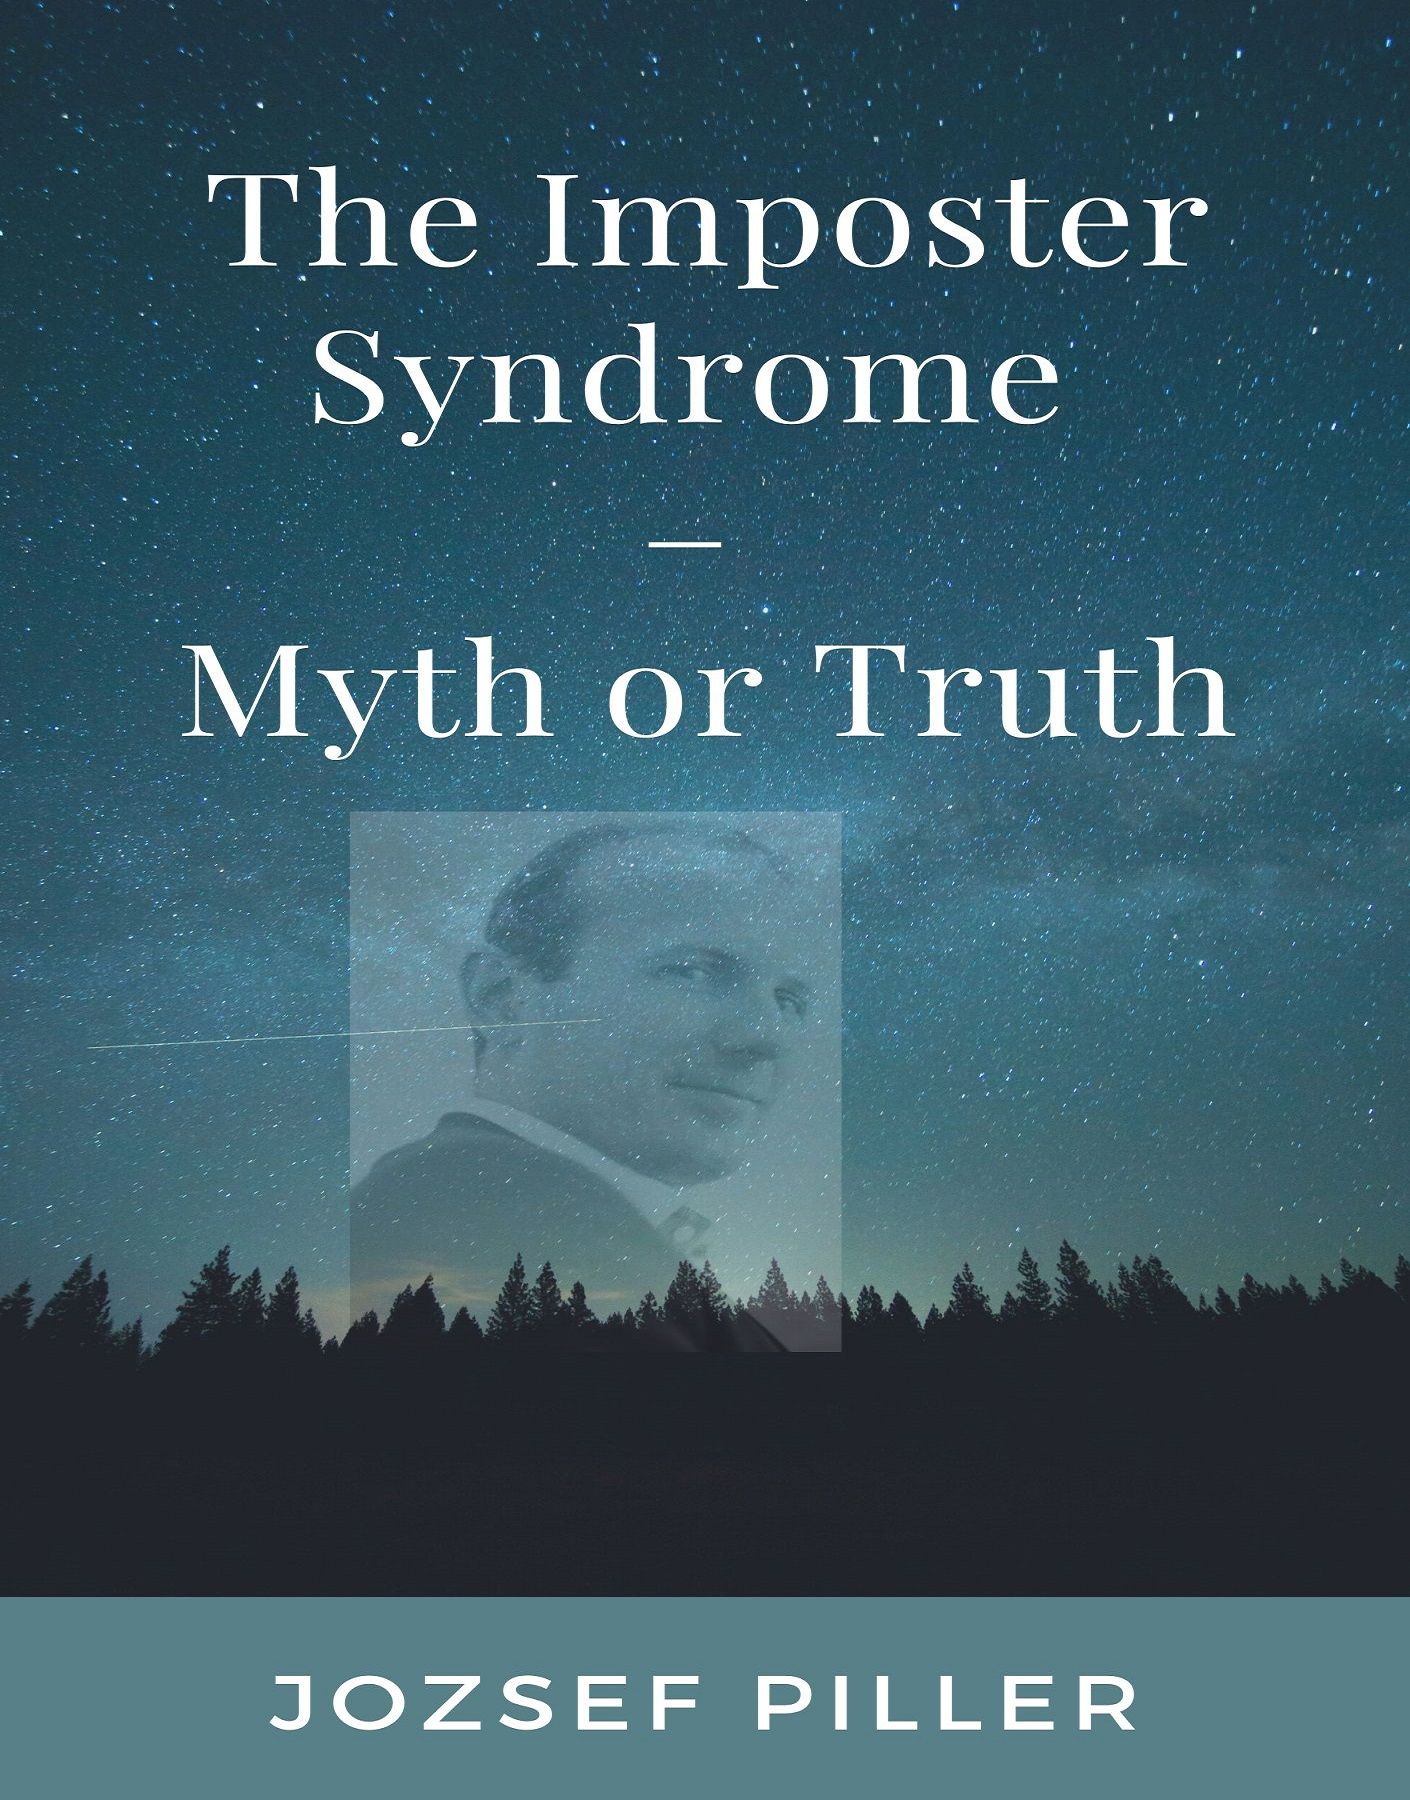 The Imposter Syndrome – Myth or Truth?, ljudbok av Jozsef Piller